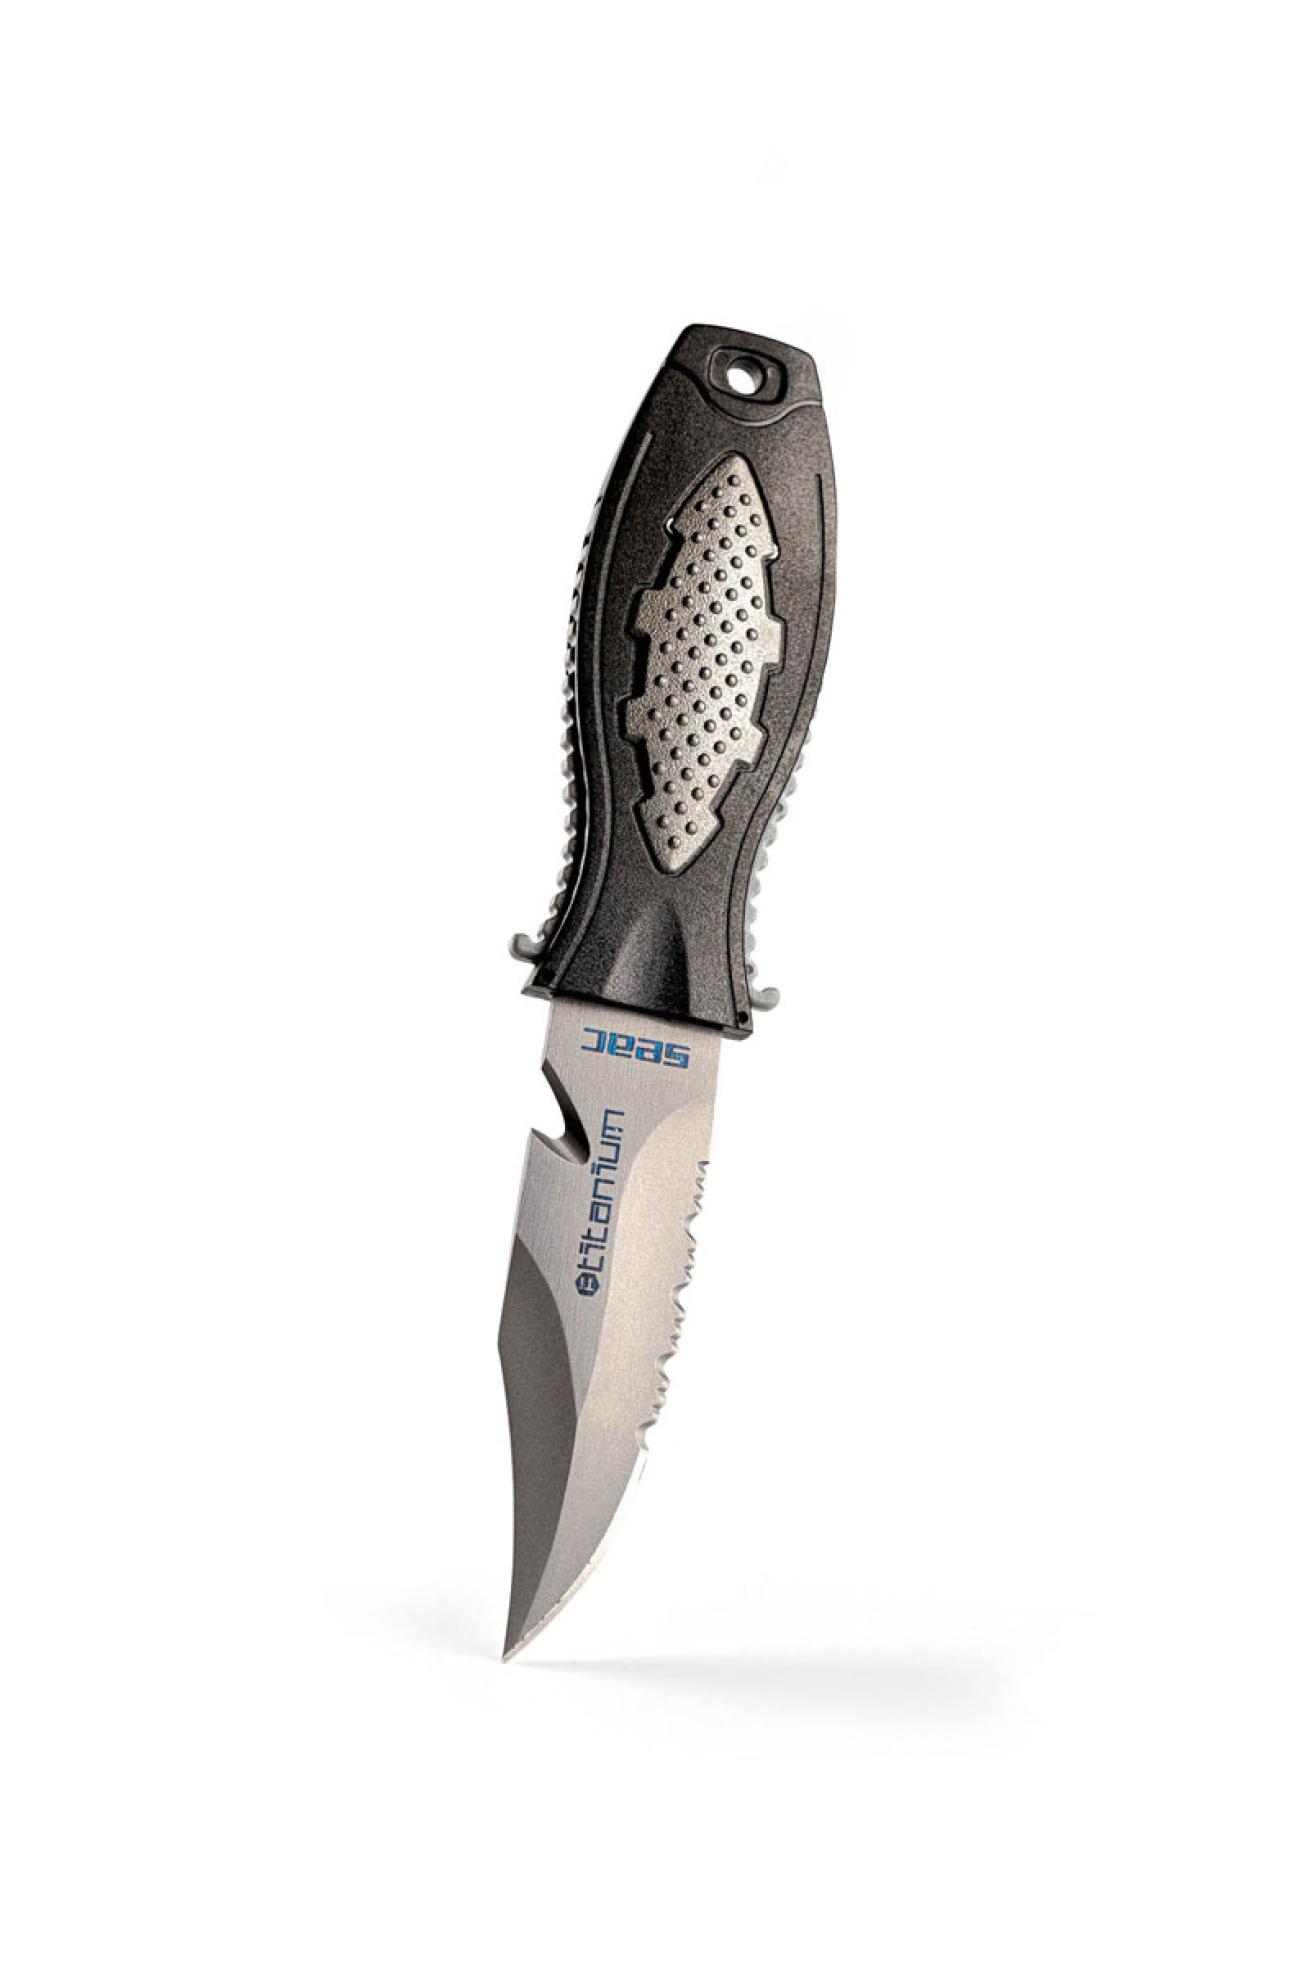 Seac Titanium Knife Dive Knife